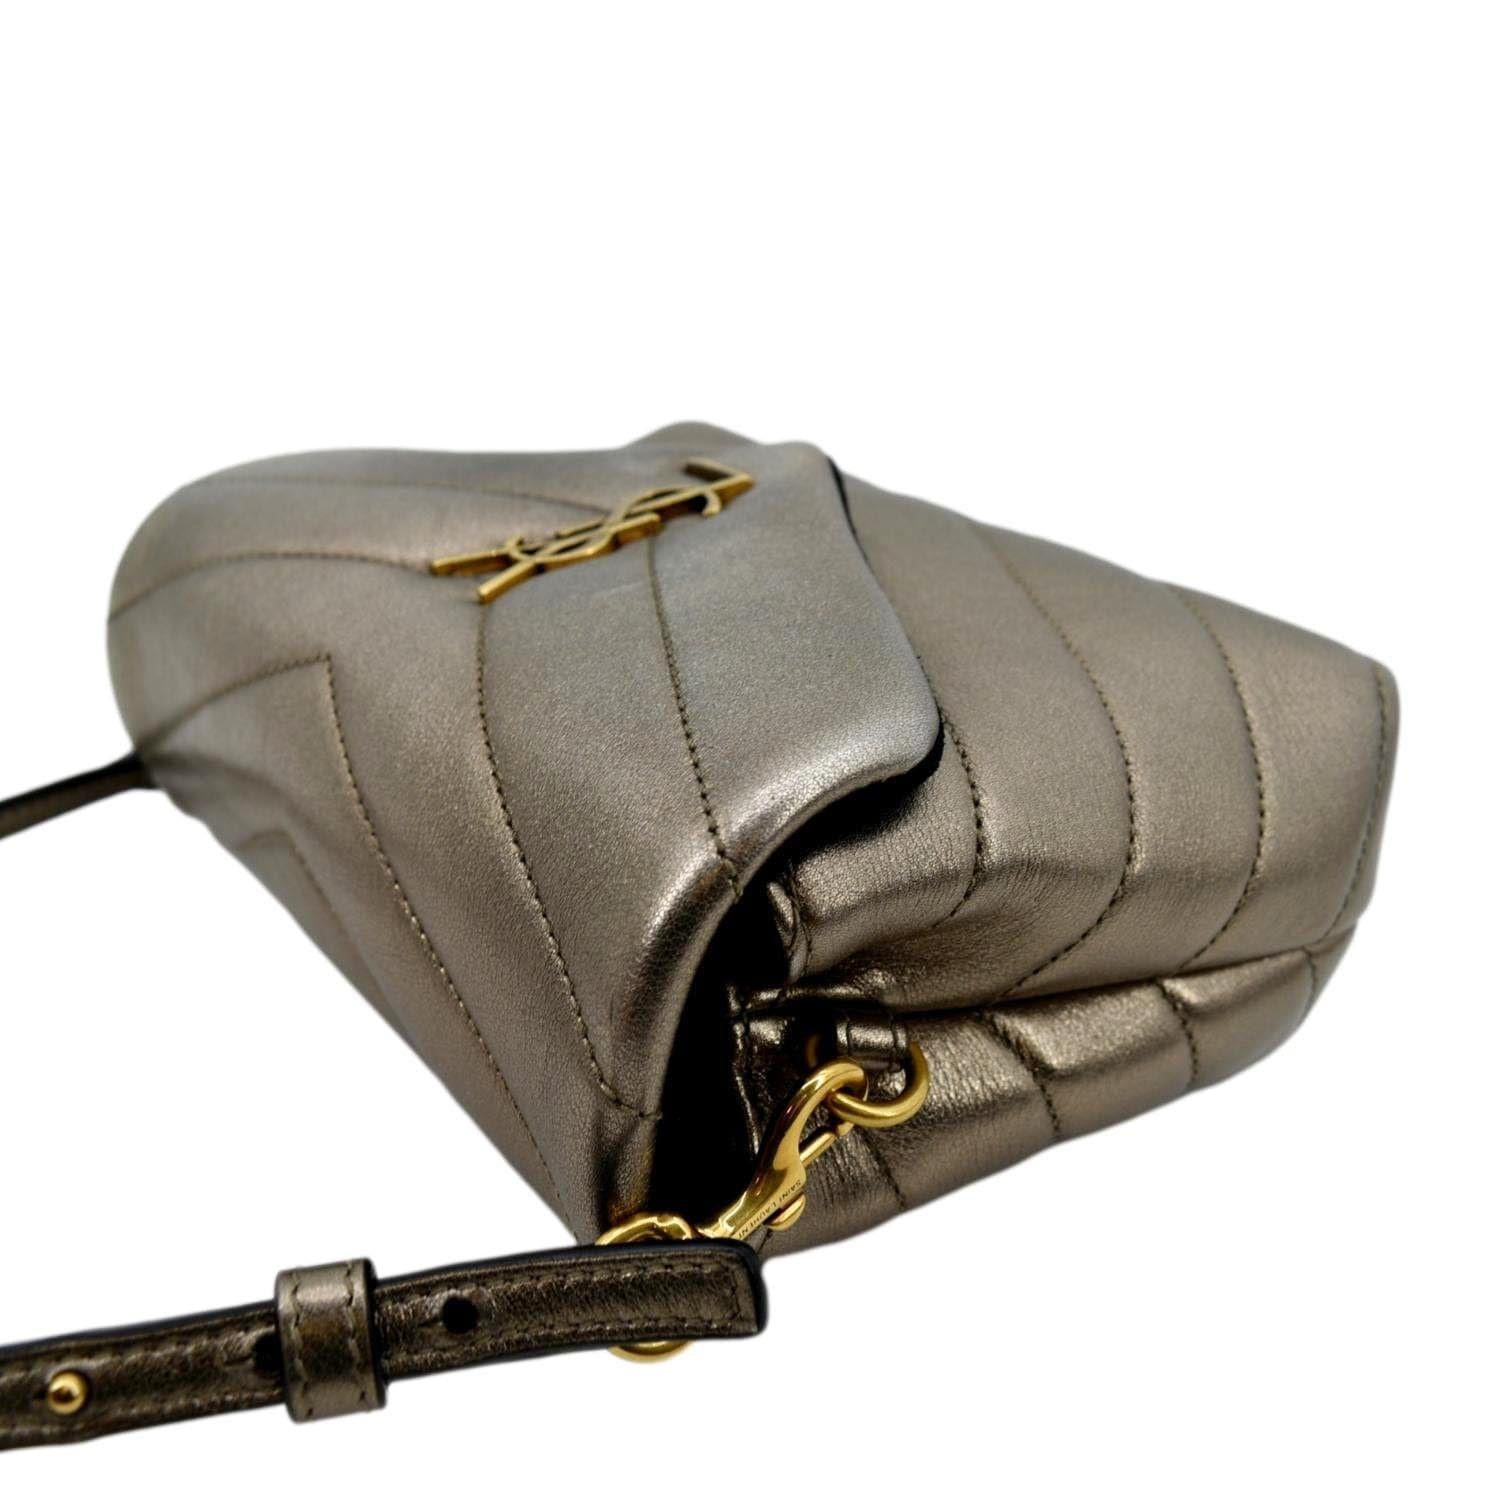 Yves Saint Laurent Loulou Toy Strap Bag